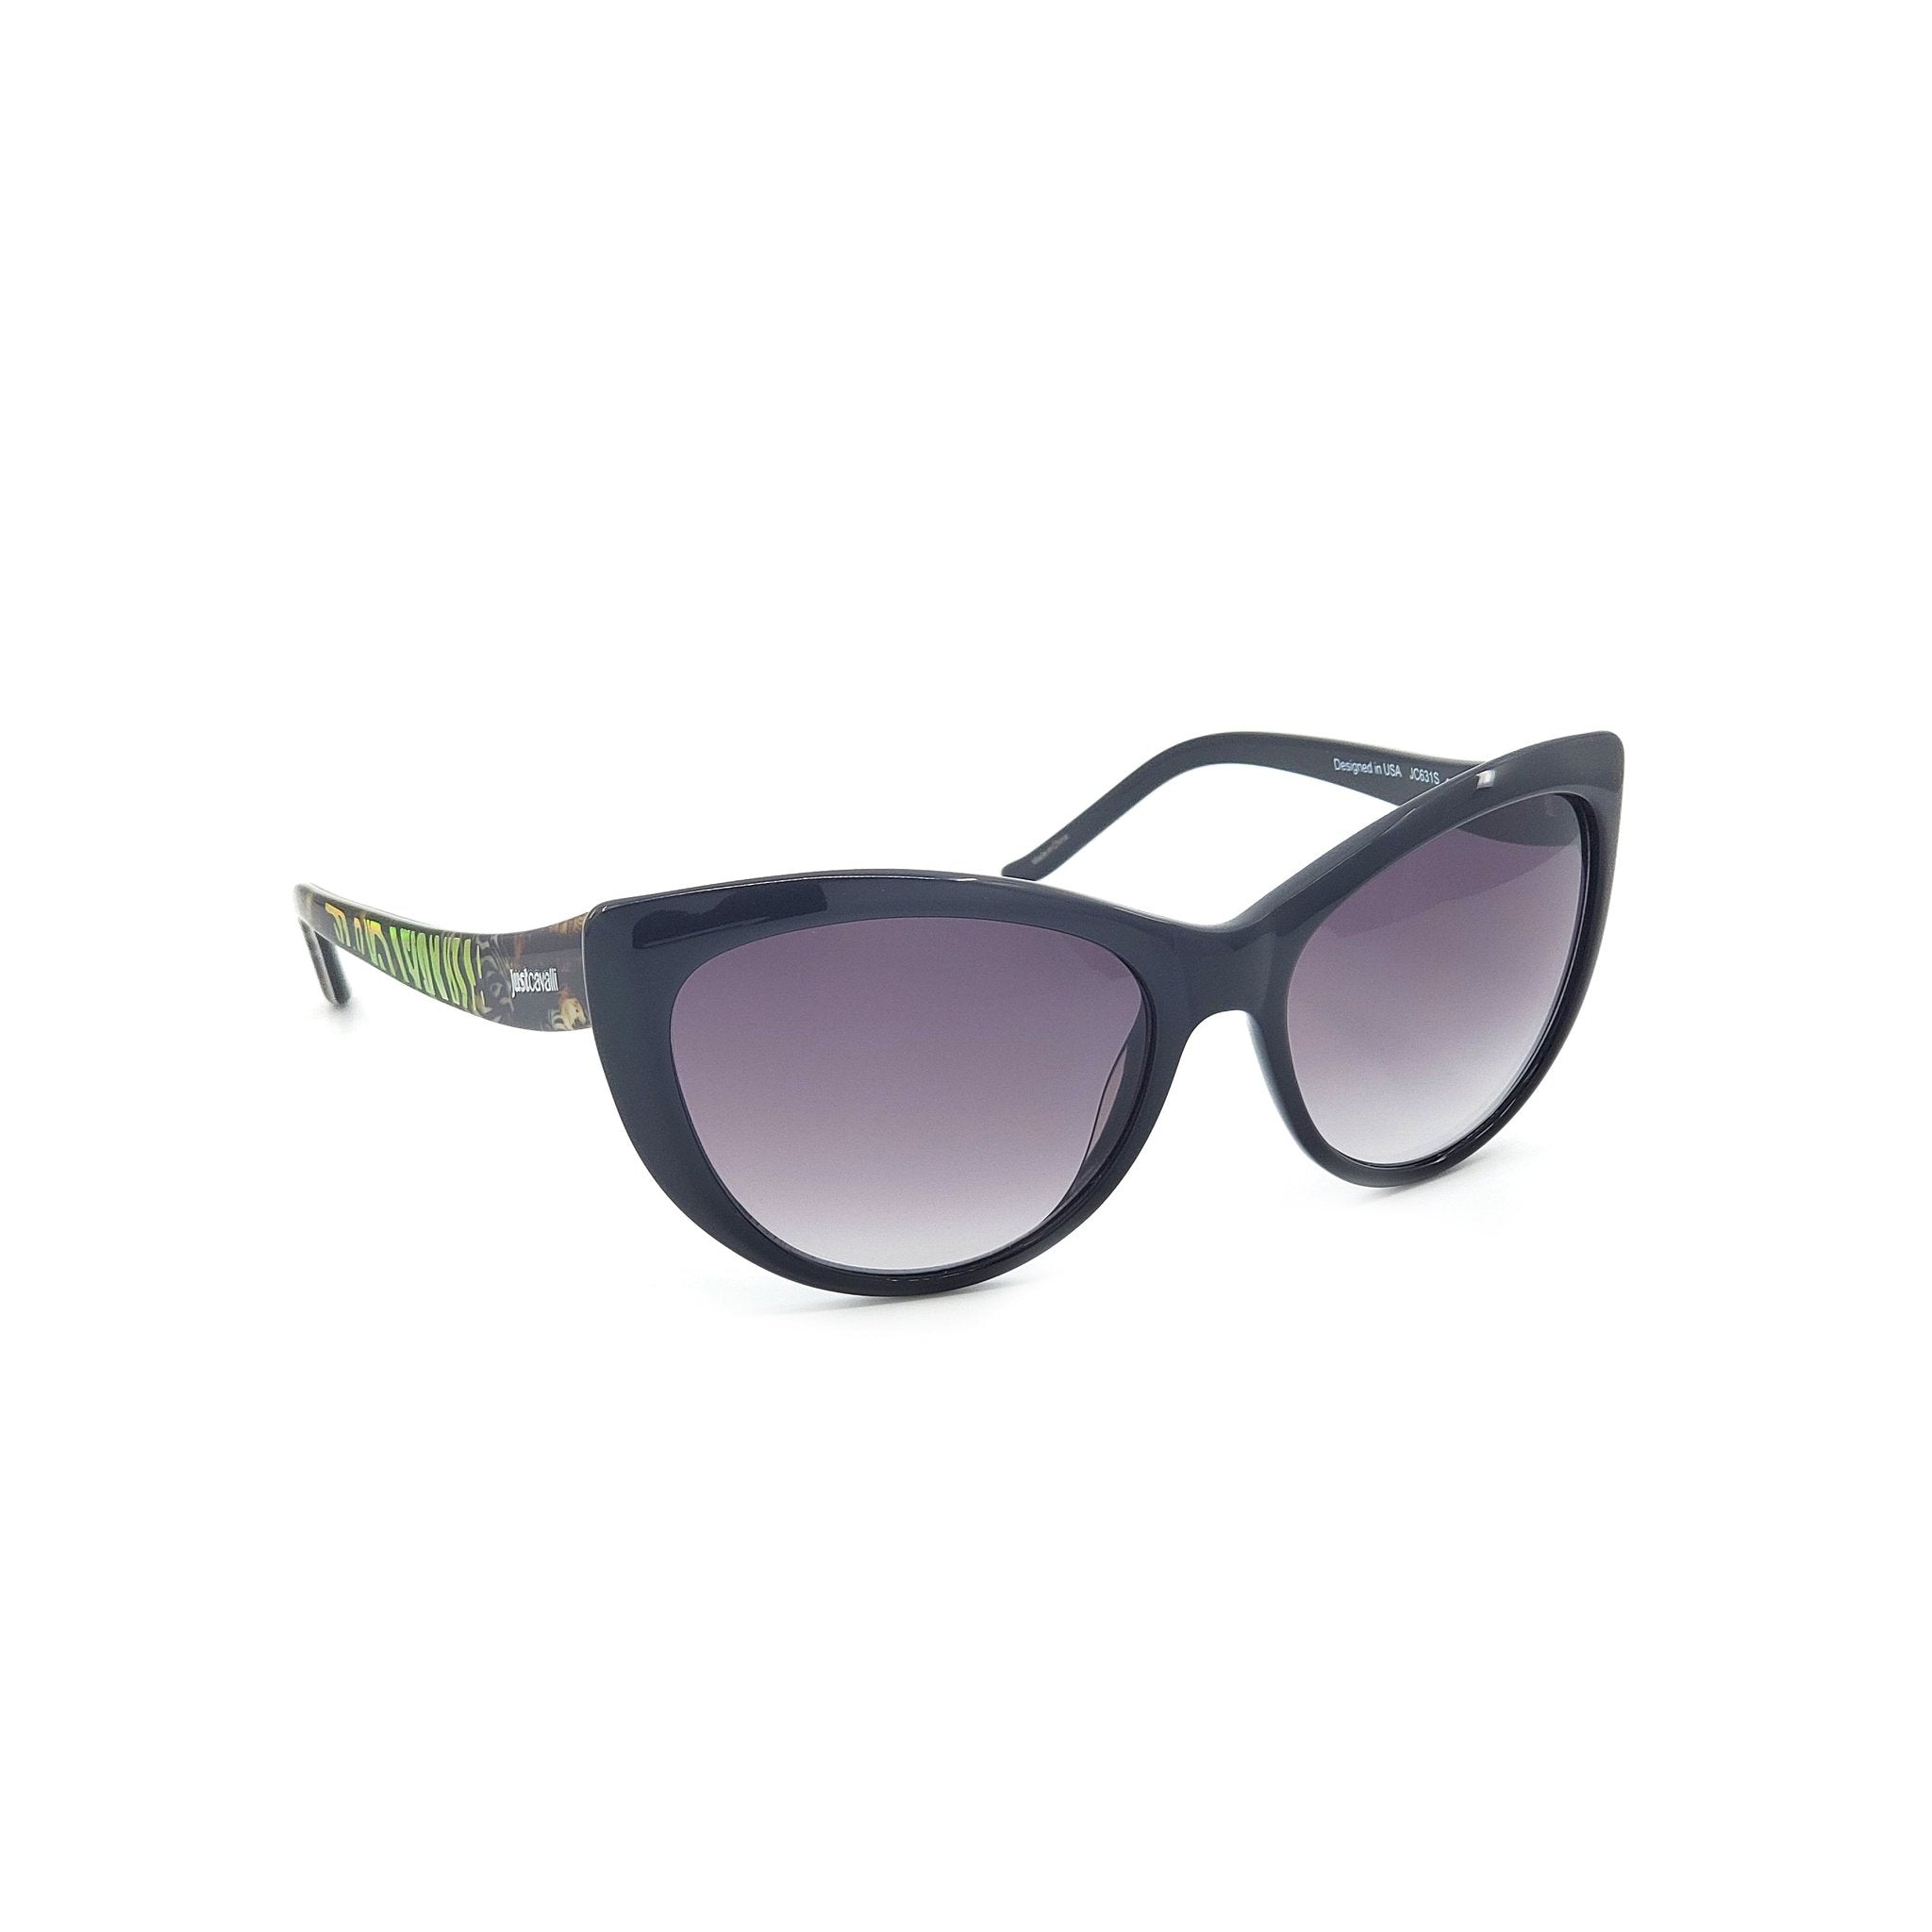 Just Cavalli Sunglasses - JC631S